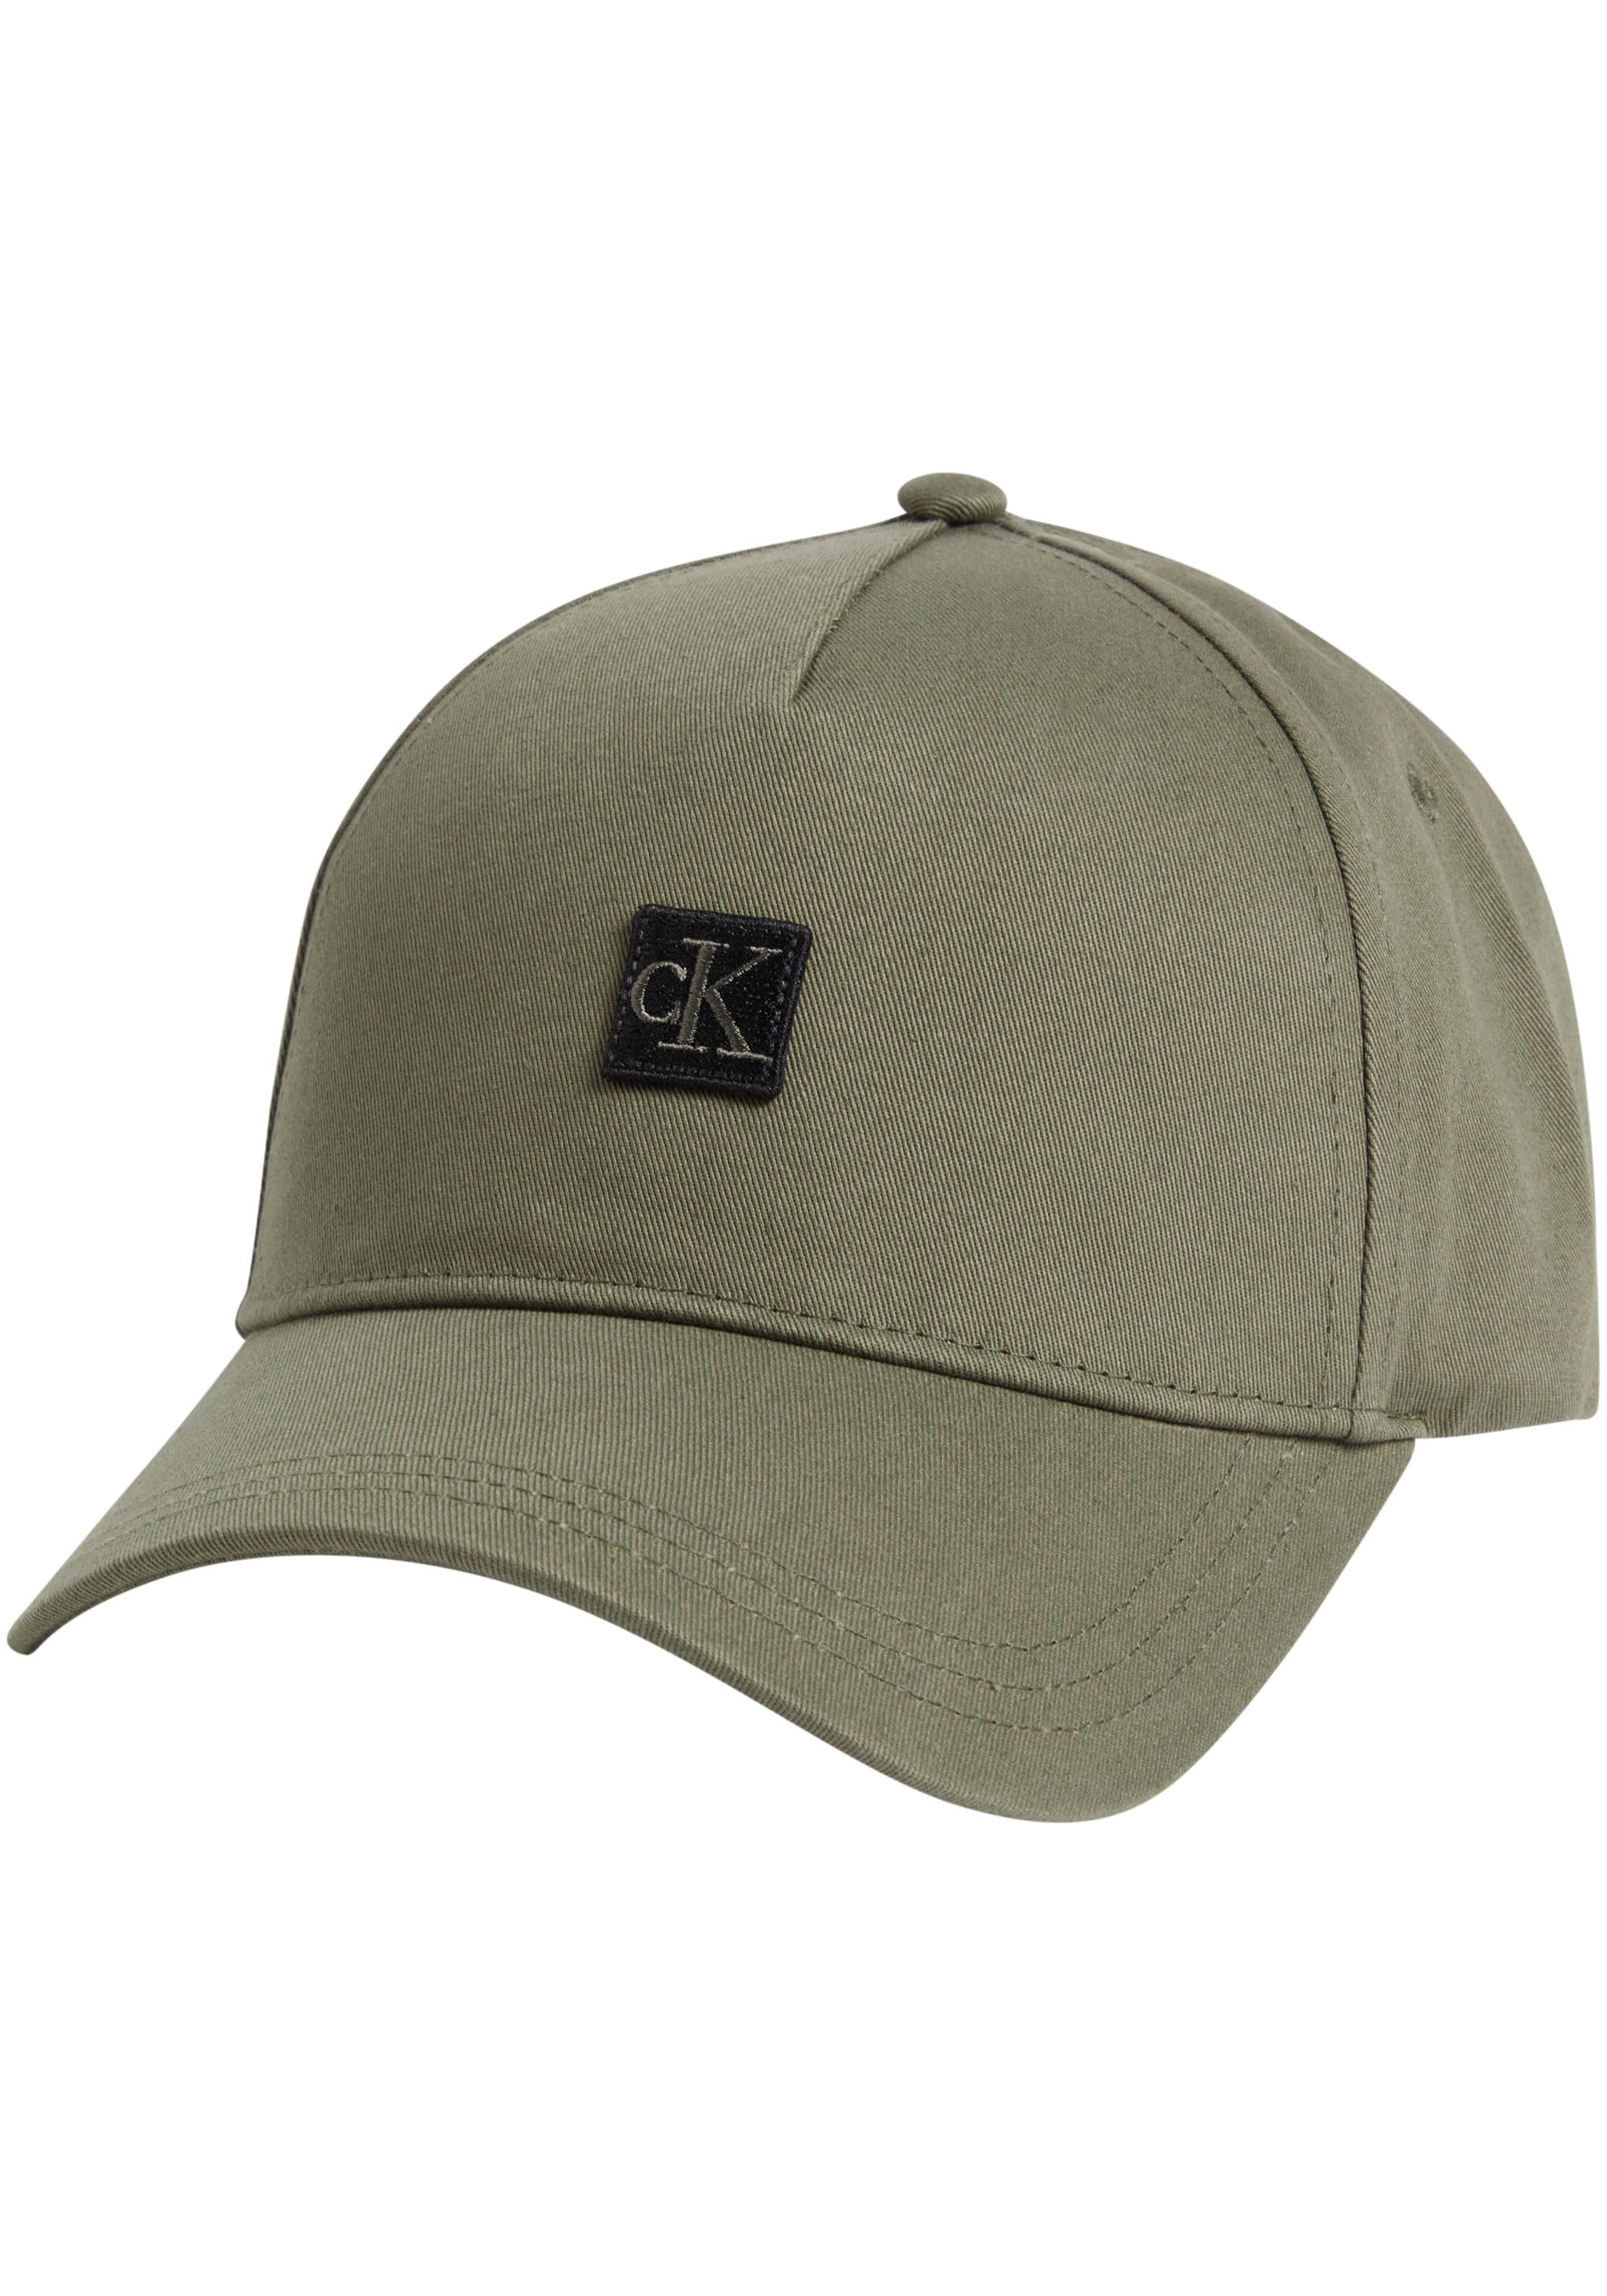 Shop Calvin im Klein Online CAP« OTTO »ARCHIVE Jeans Baseball Cap